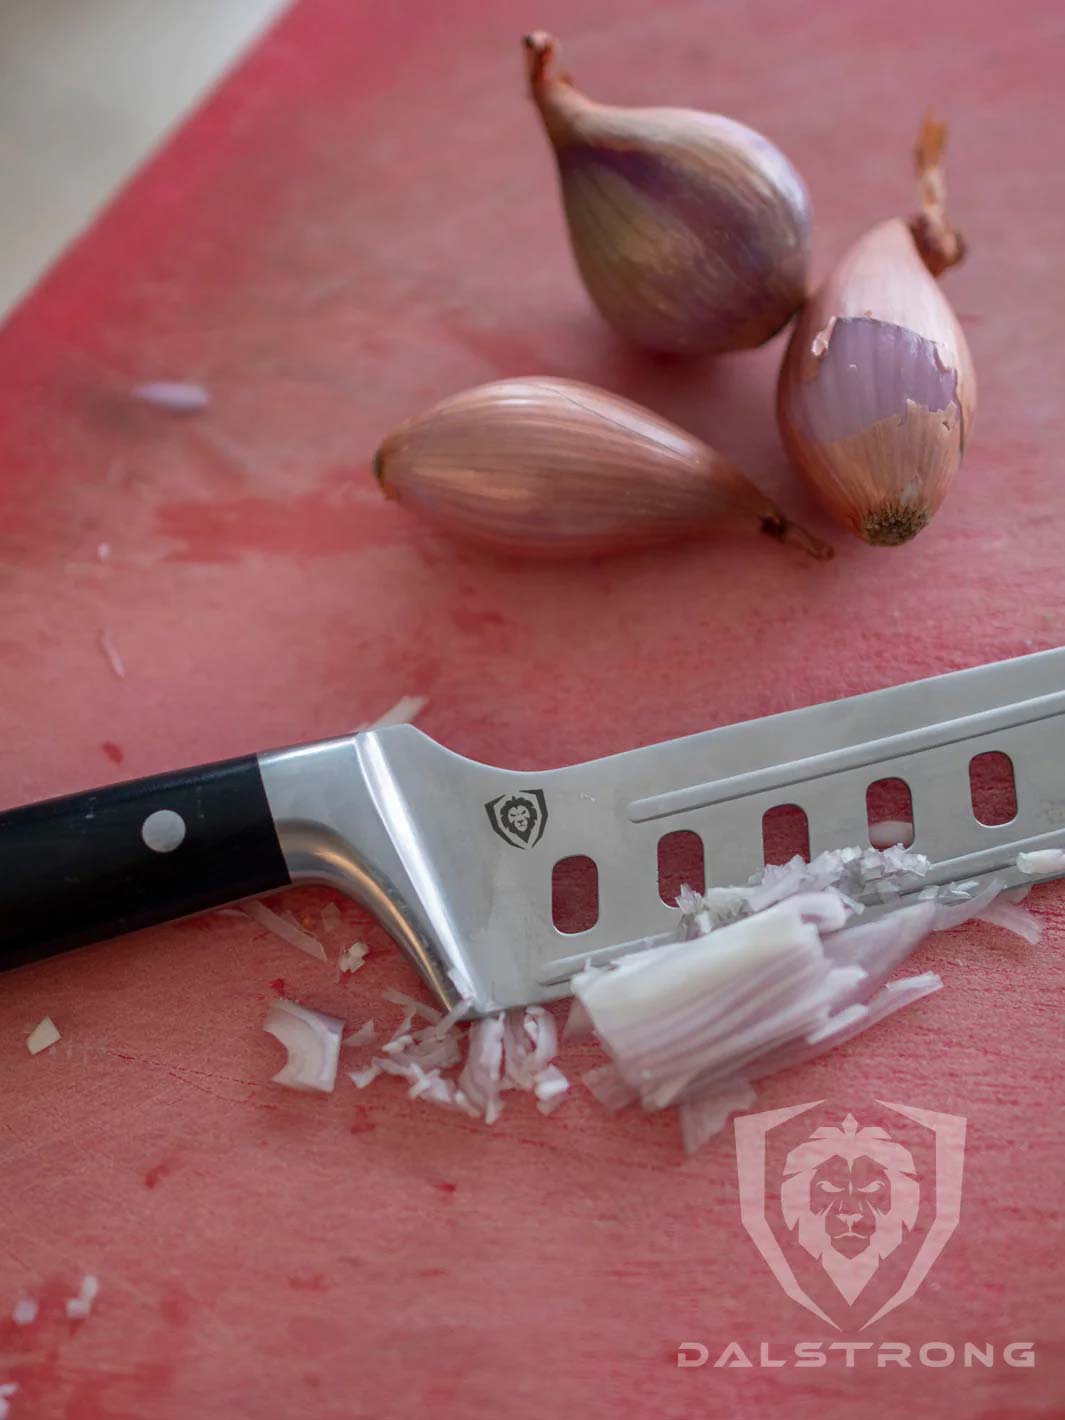 Dalstrong Nakiri Vegetable Knife - Shogun Series x - VG10 - Hammered Finish - 6 inch (152mm)